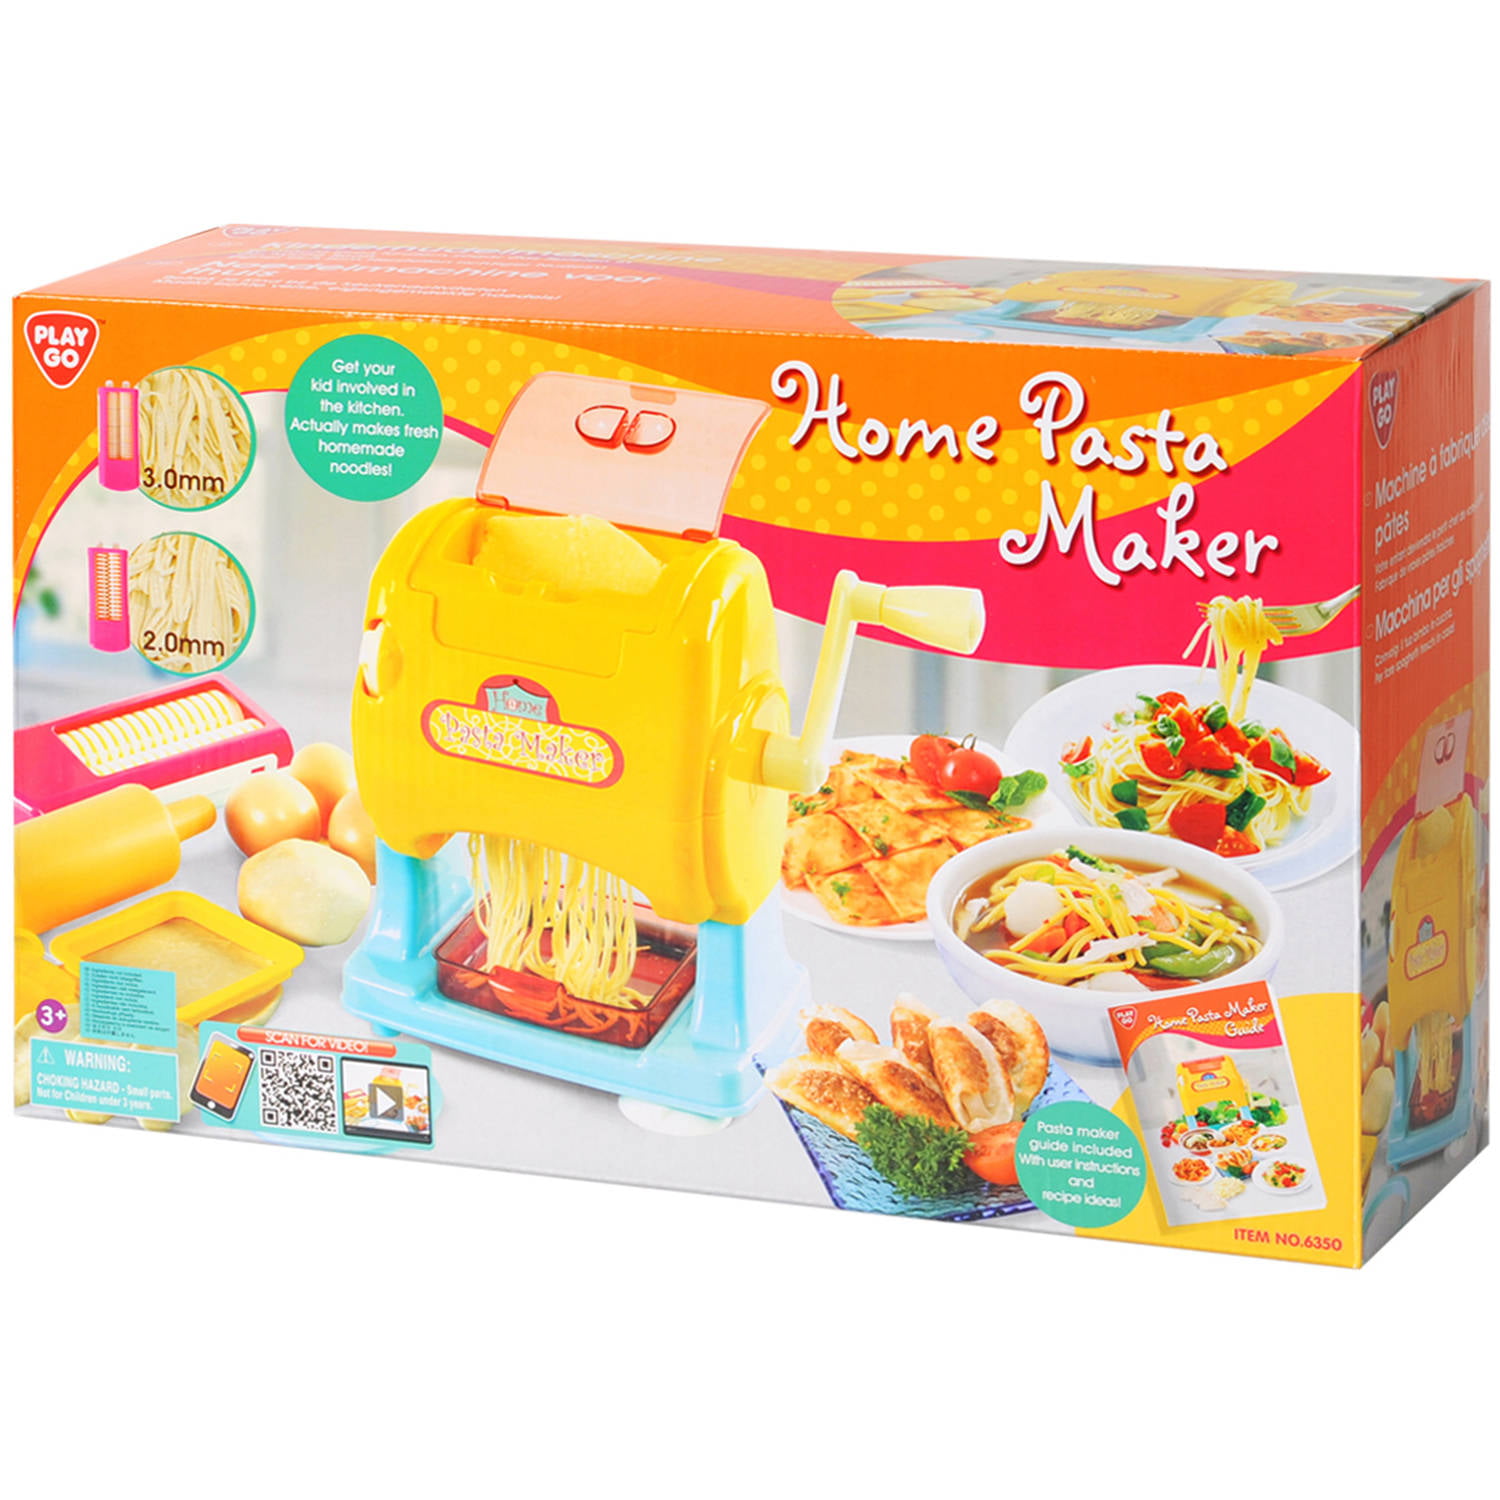 Home Pasta Maker - Walmart.com 